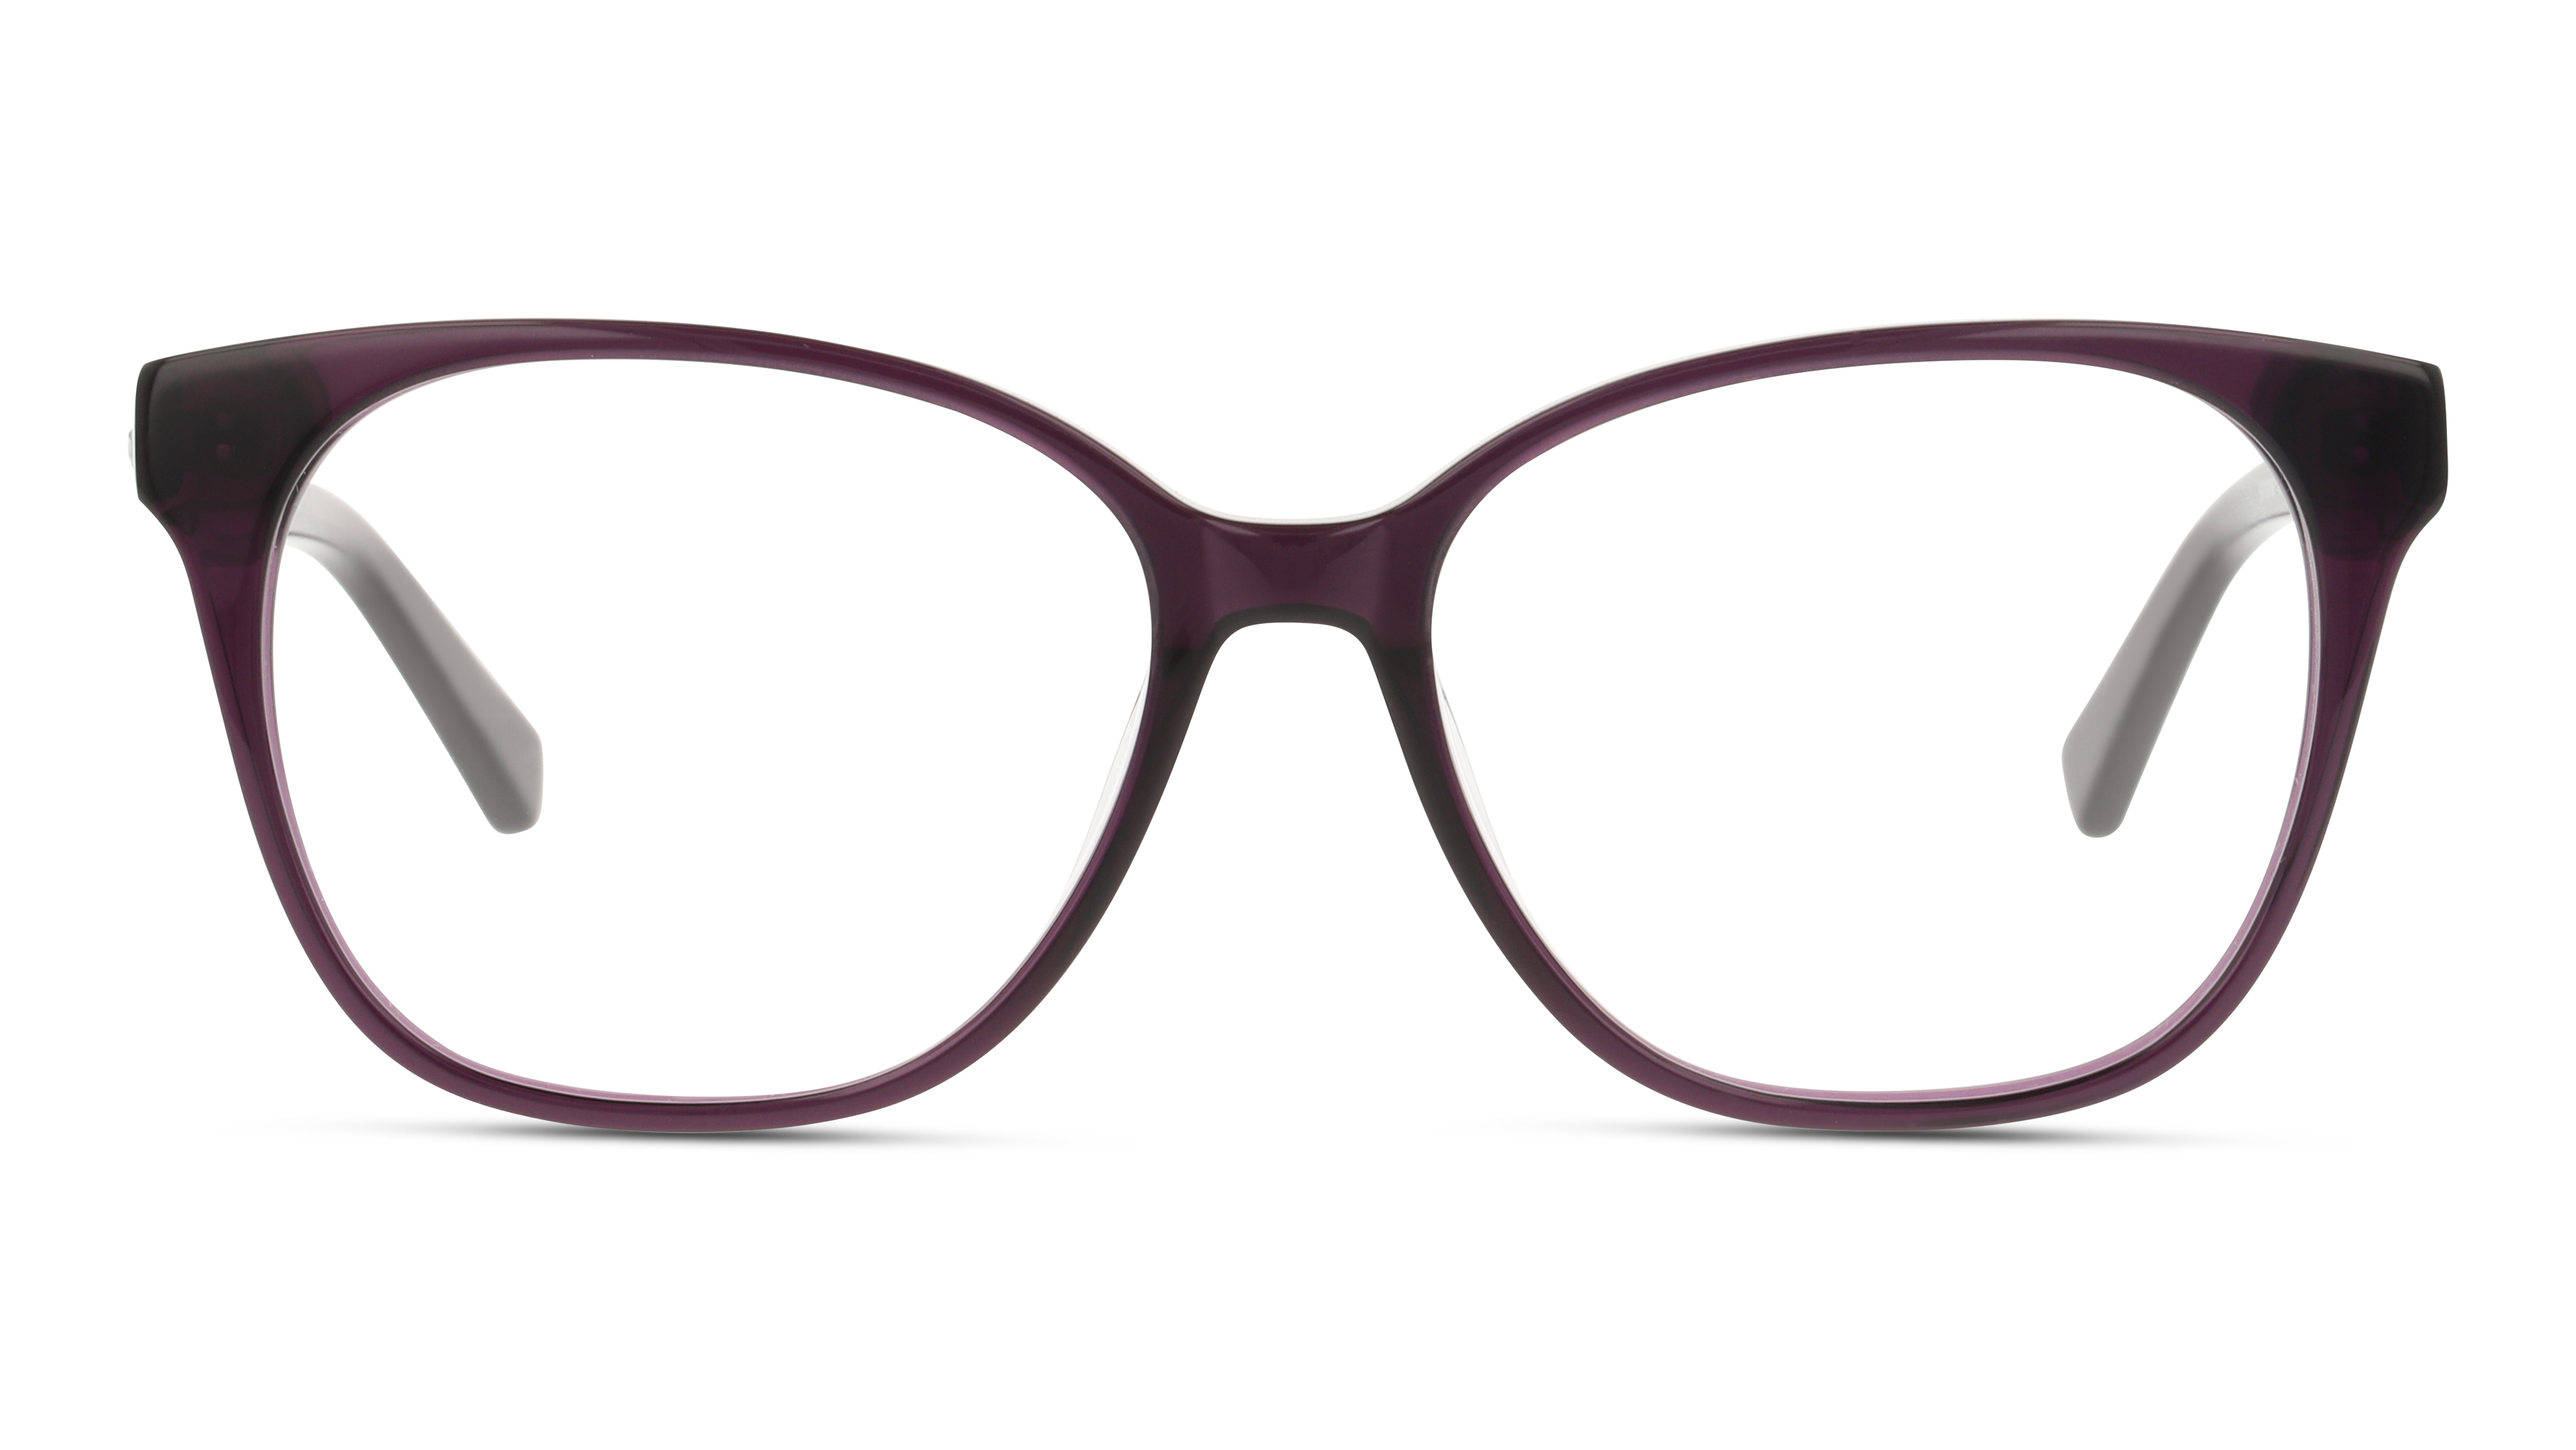 Front Unofficial UNOF0458 (VV00) Glasses Transparent / Violet